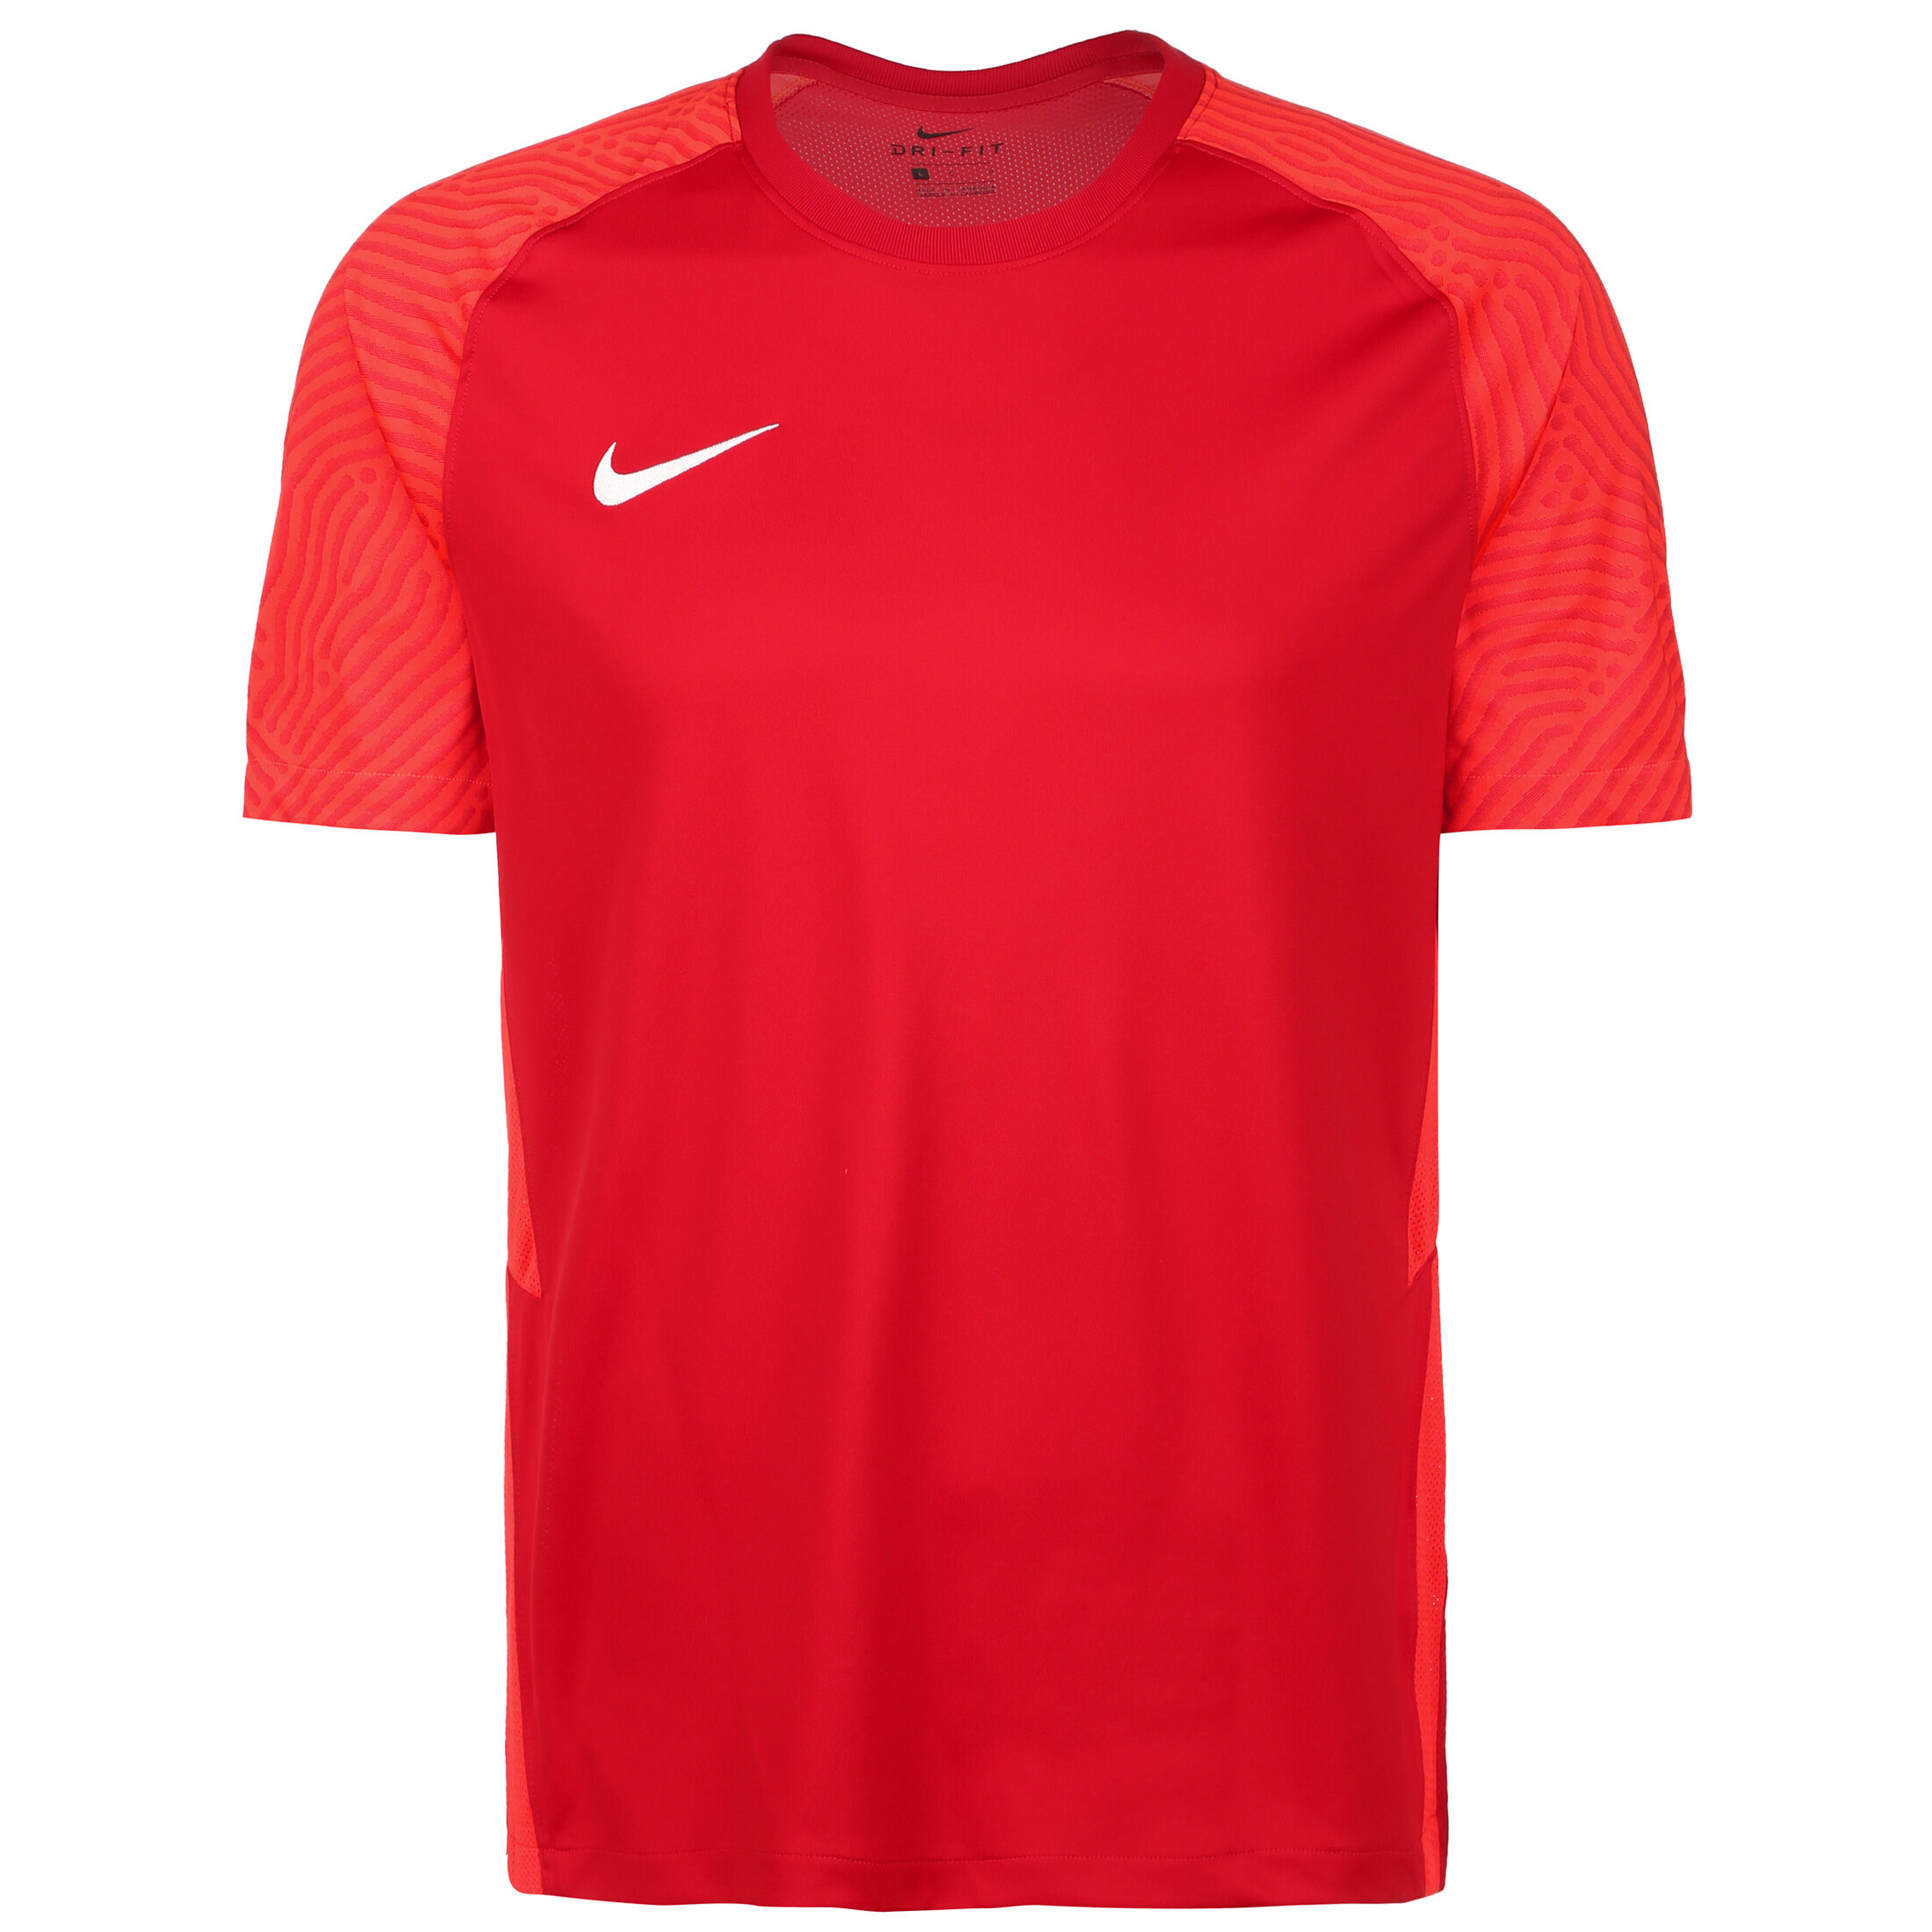 Рубашка Nike Fußballtrikot Strike II, красный футболка игровая подростковая nike strike ii cw3557 100